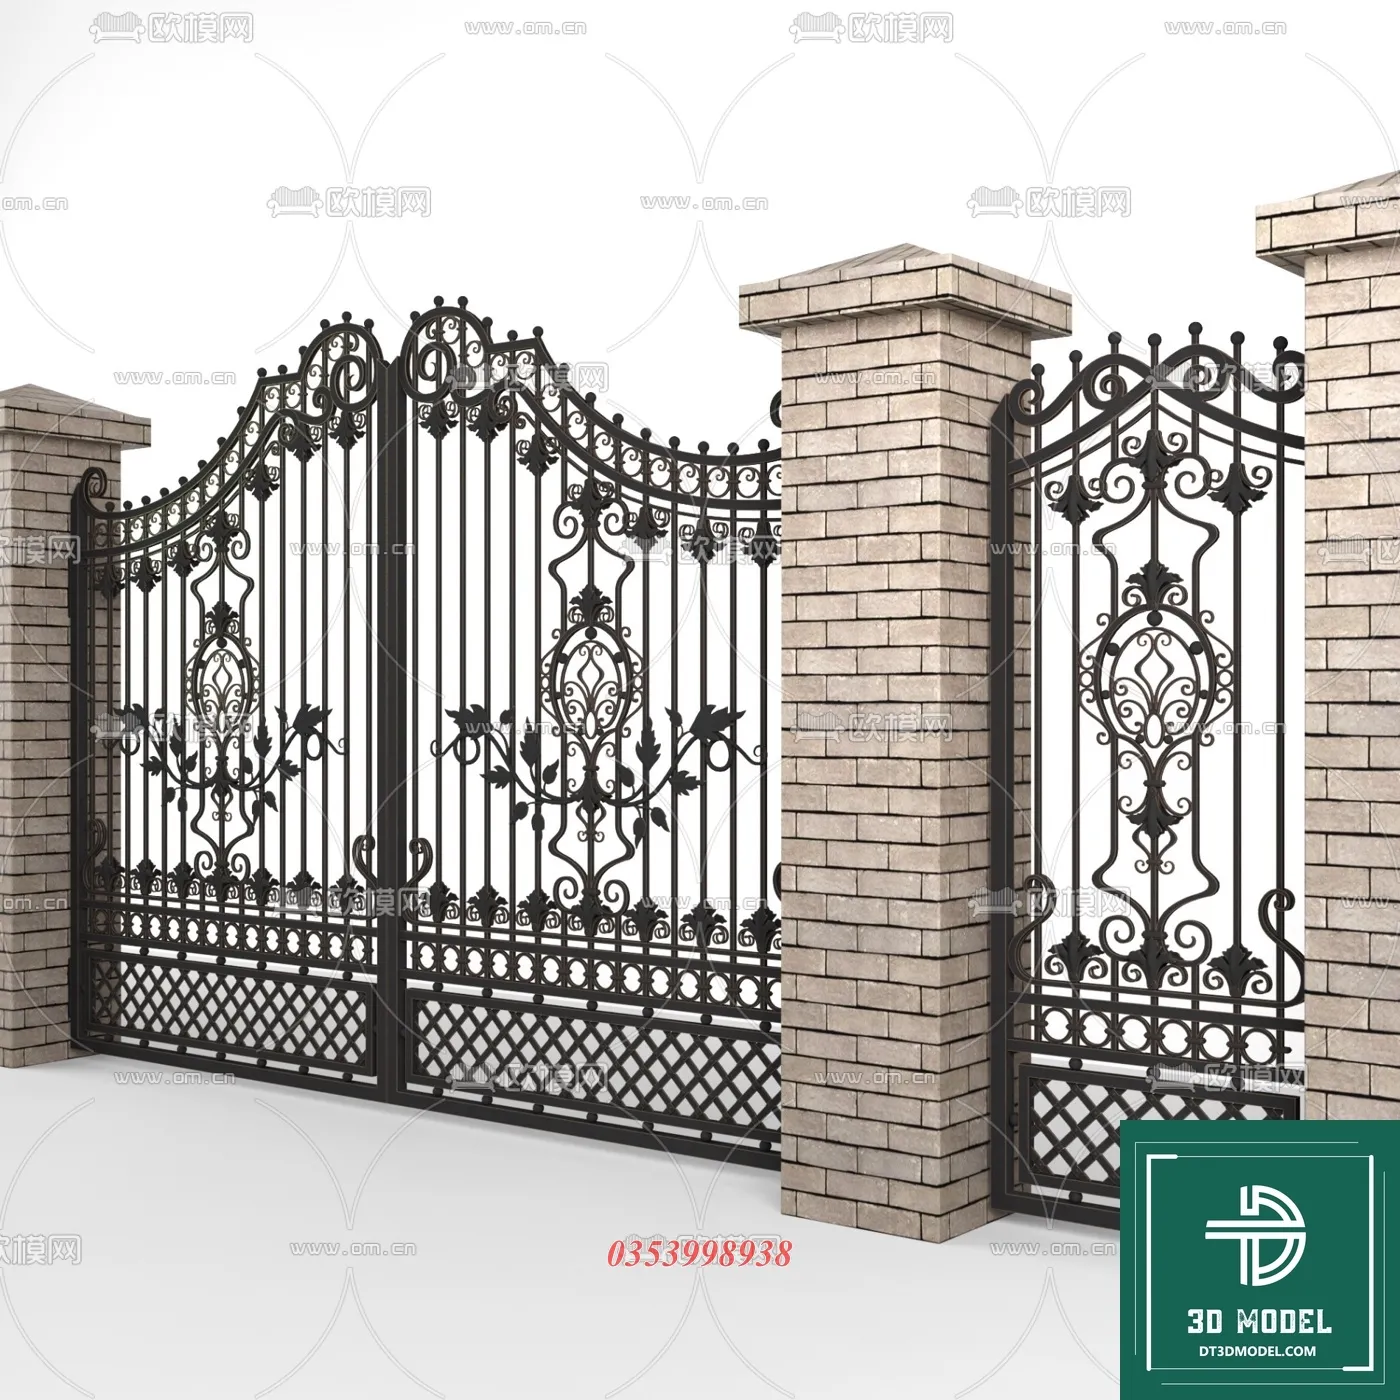 CLASSIC GATE – 3D MODELS – 018